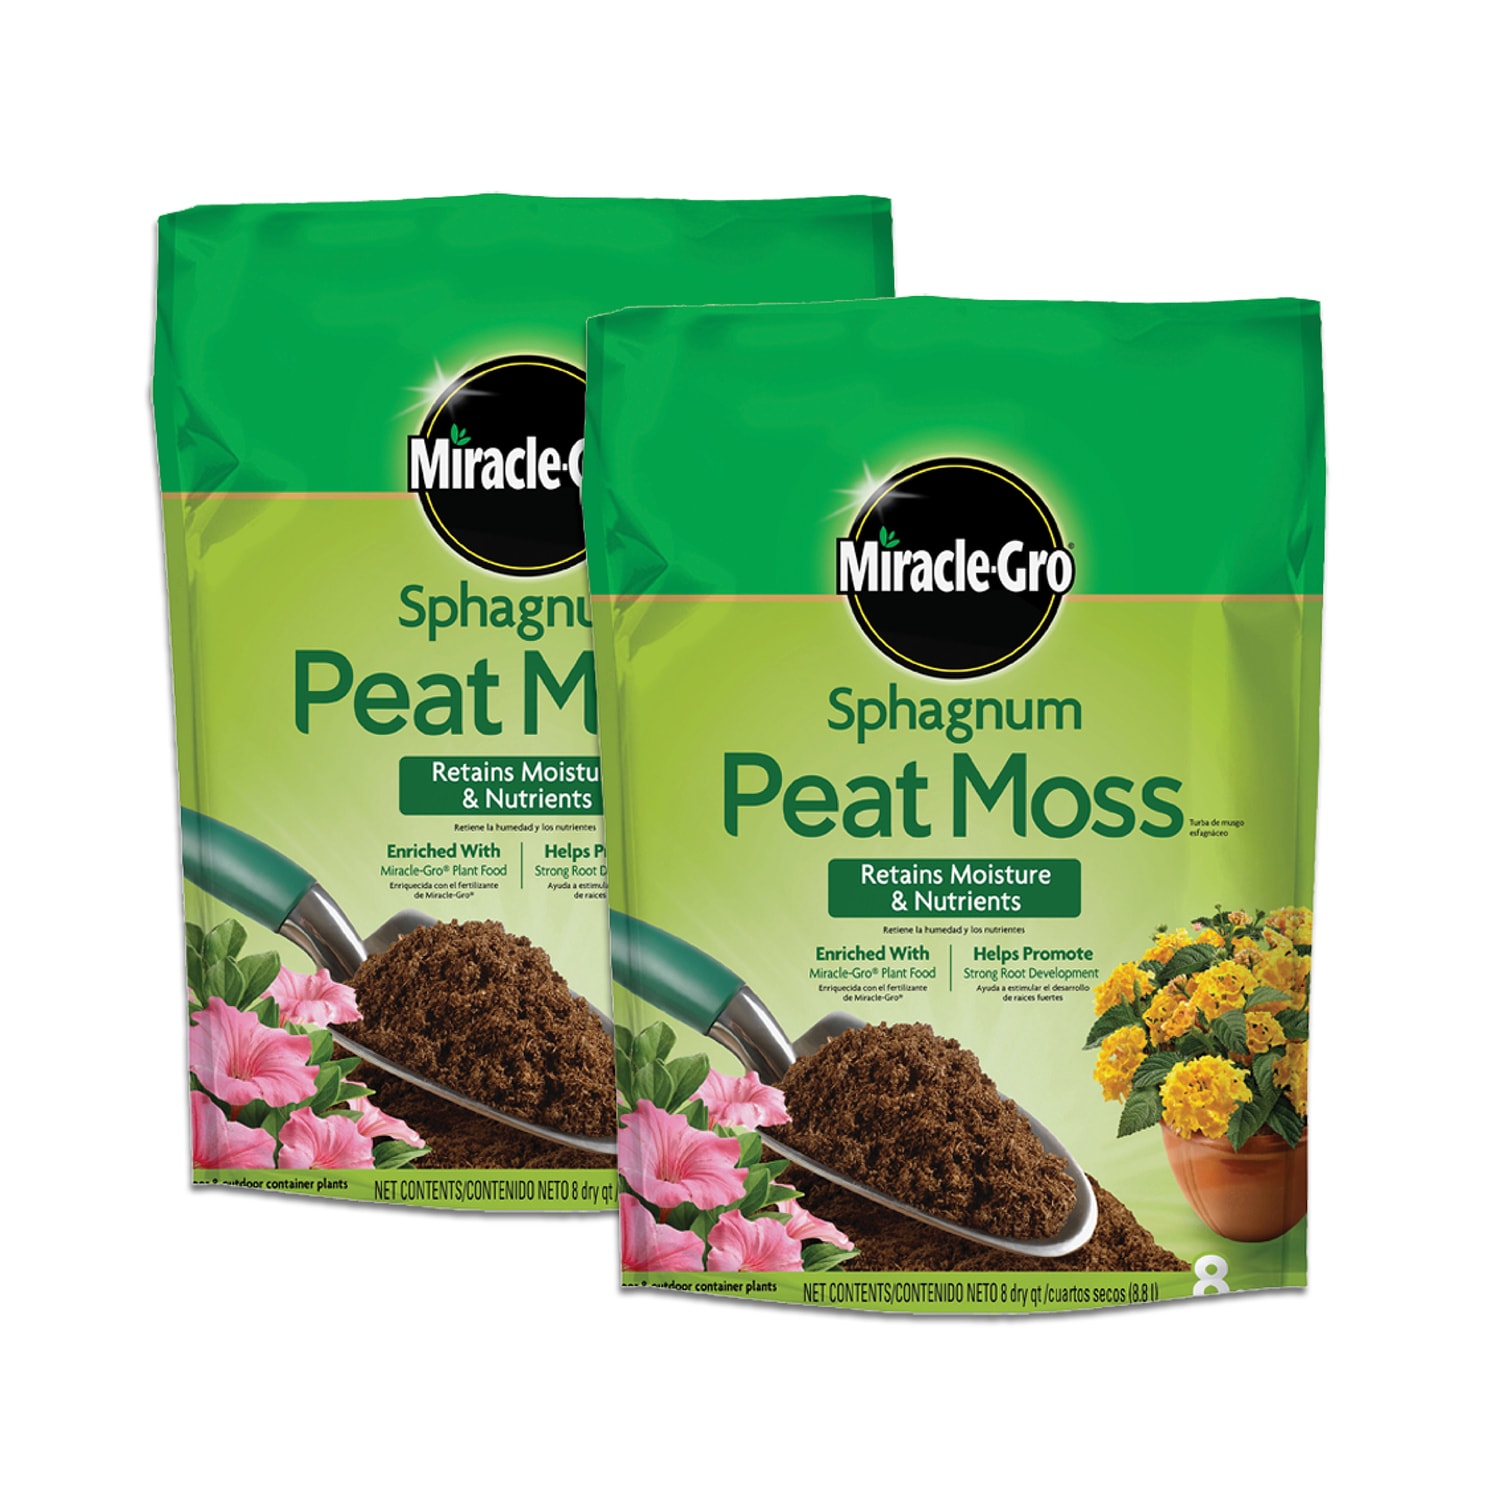 Peat Moss - Good or bad?, Planter